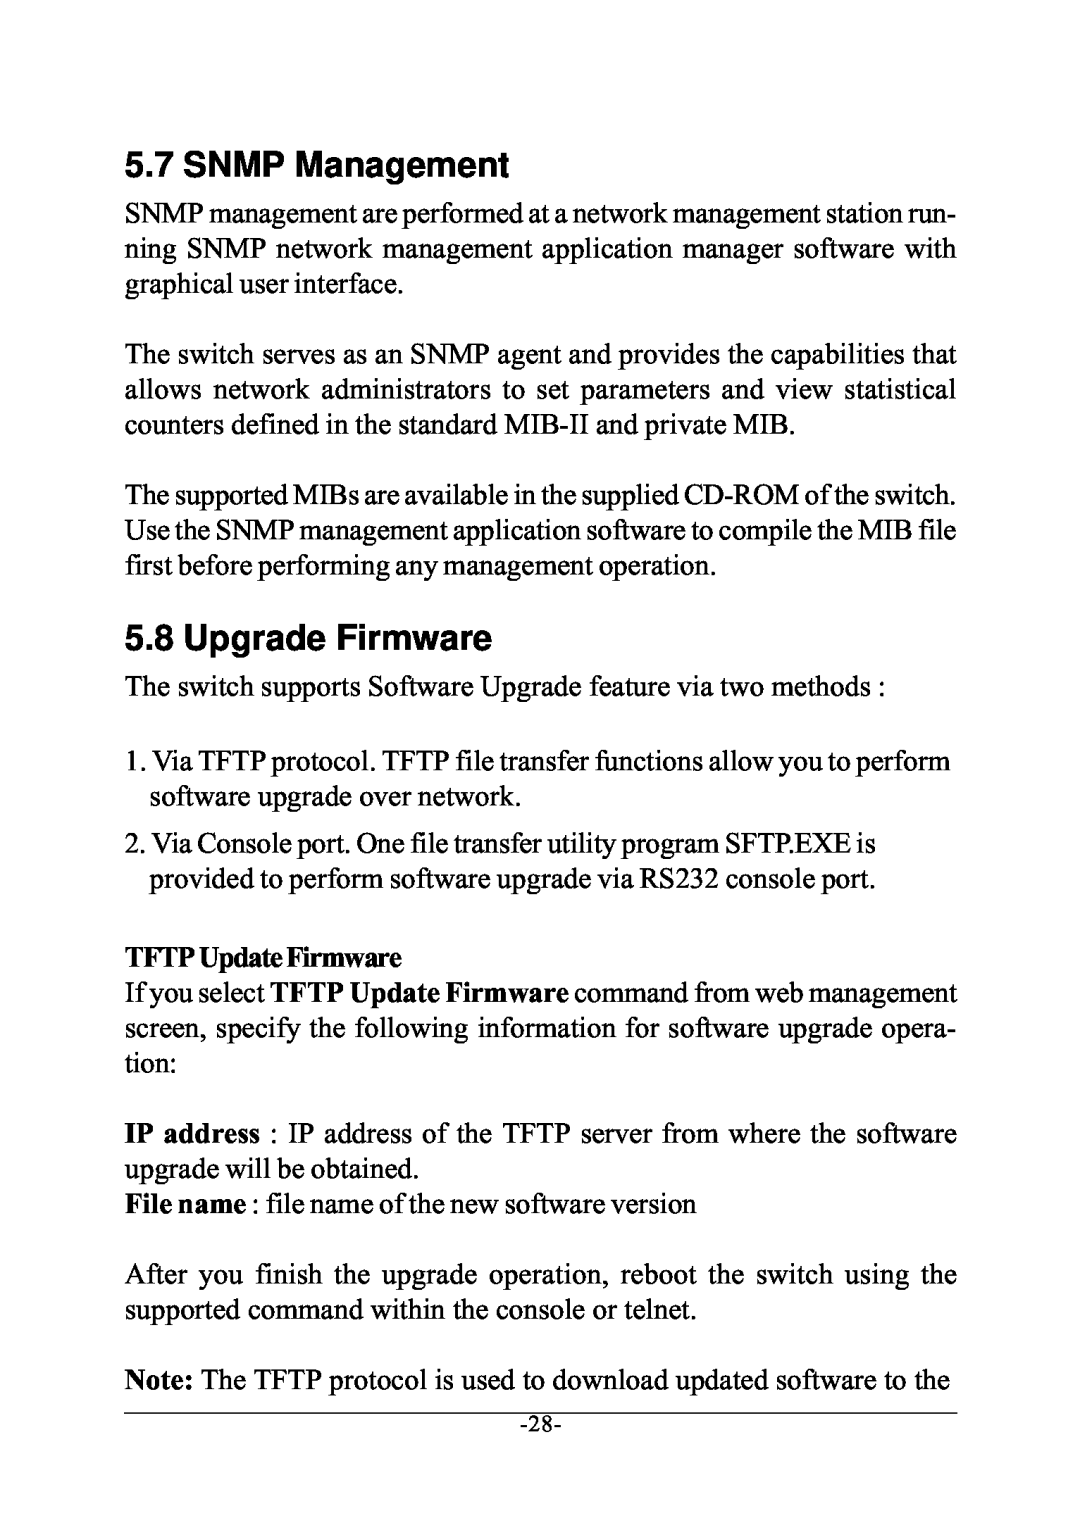 KTI Networks KS-801 manual SNMP Management, Upgrade Firmware 